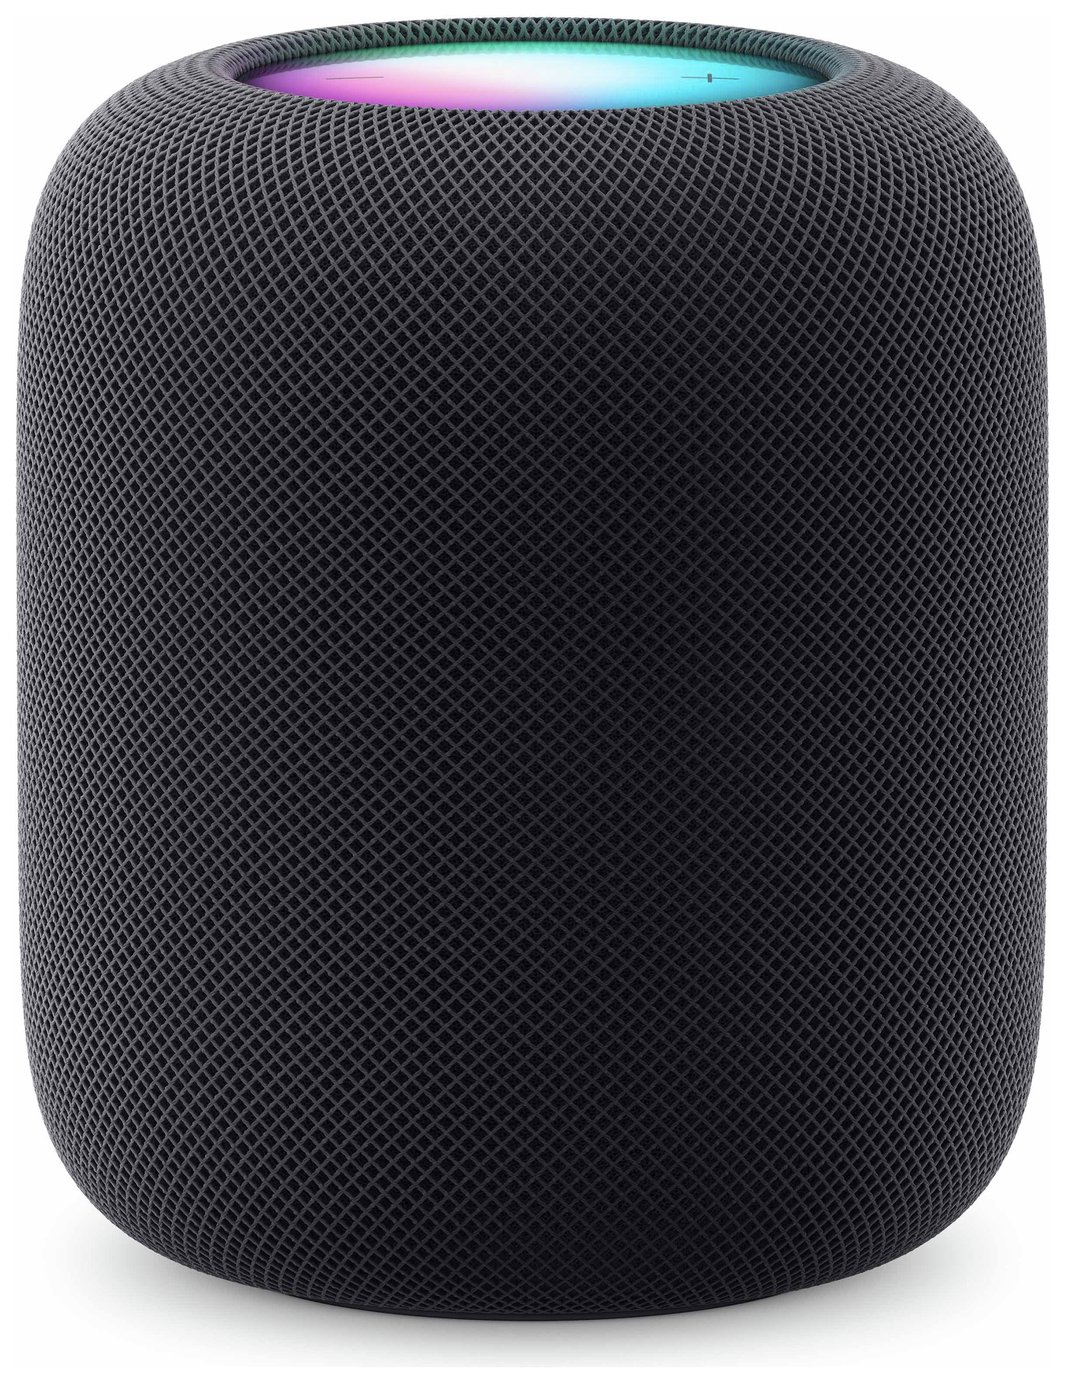 Apple HomePod Smart Speaker - Midnight